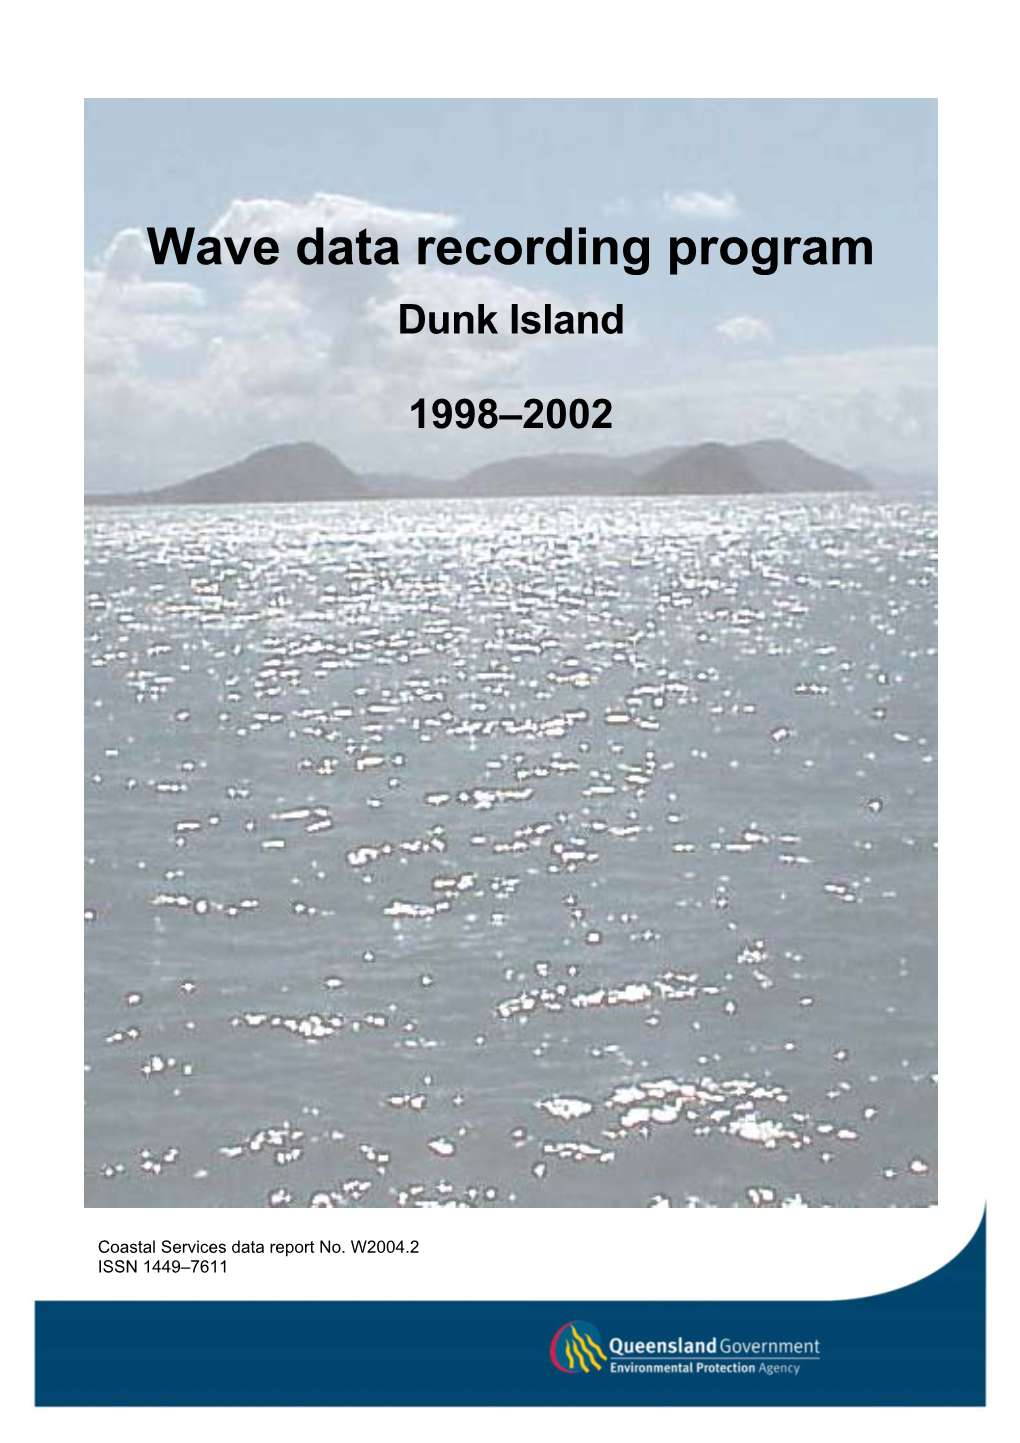 Wave Data Recording Program Dunk Island 1998-2002